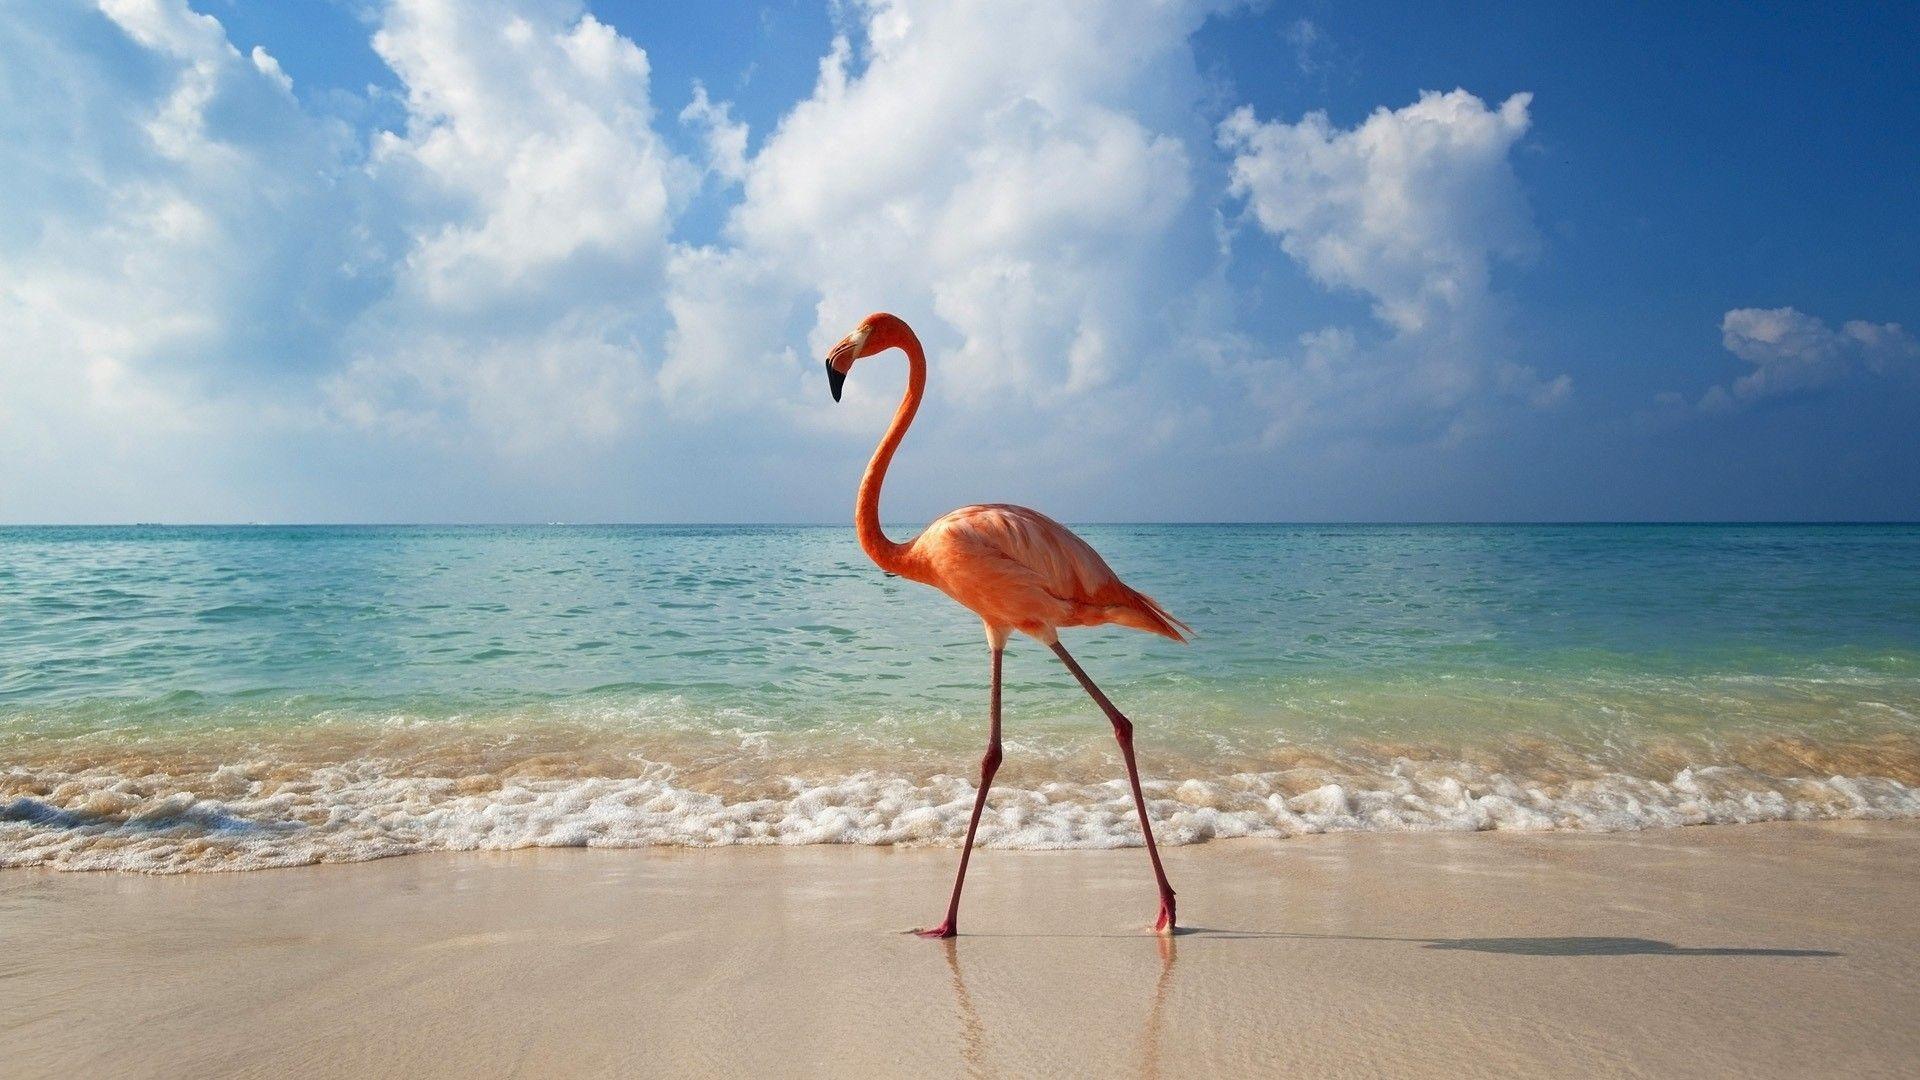 Flamingo Wallpaper background picture